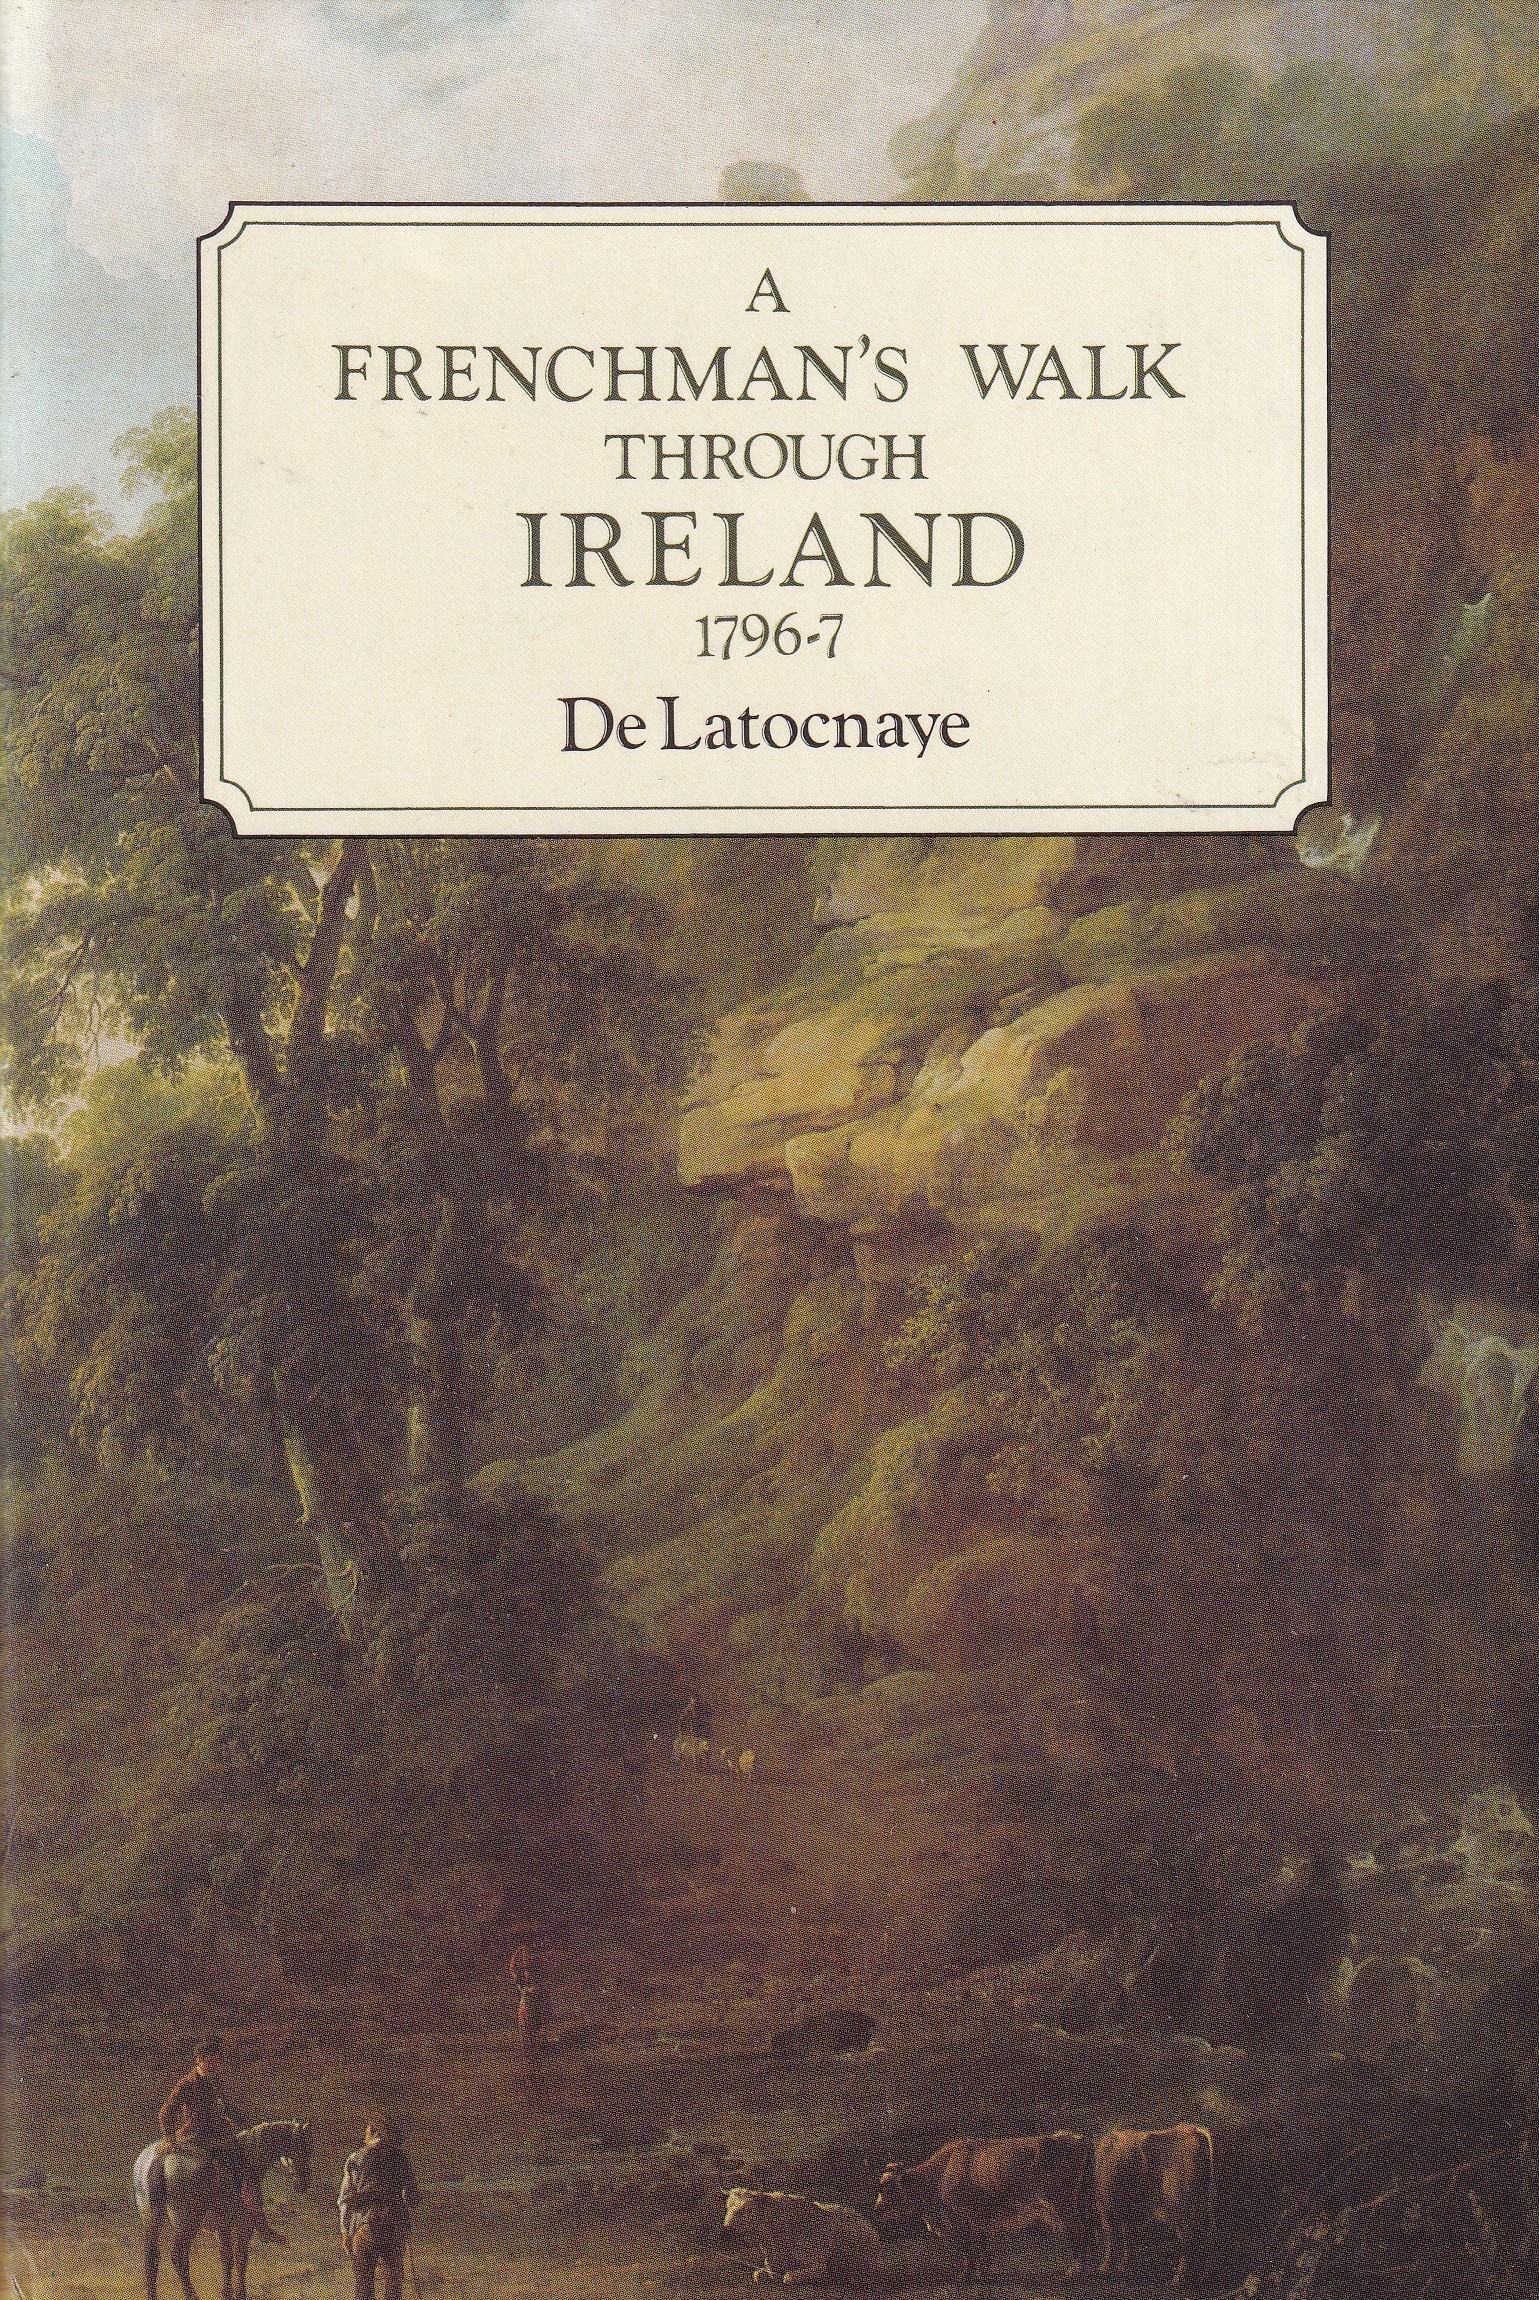 A Frenchman’s Walk Through Ireland 1796-7 by De Latocnaye